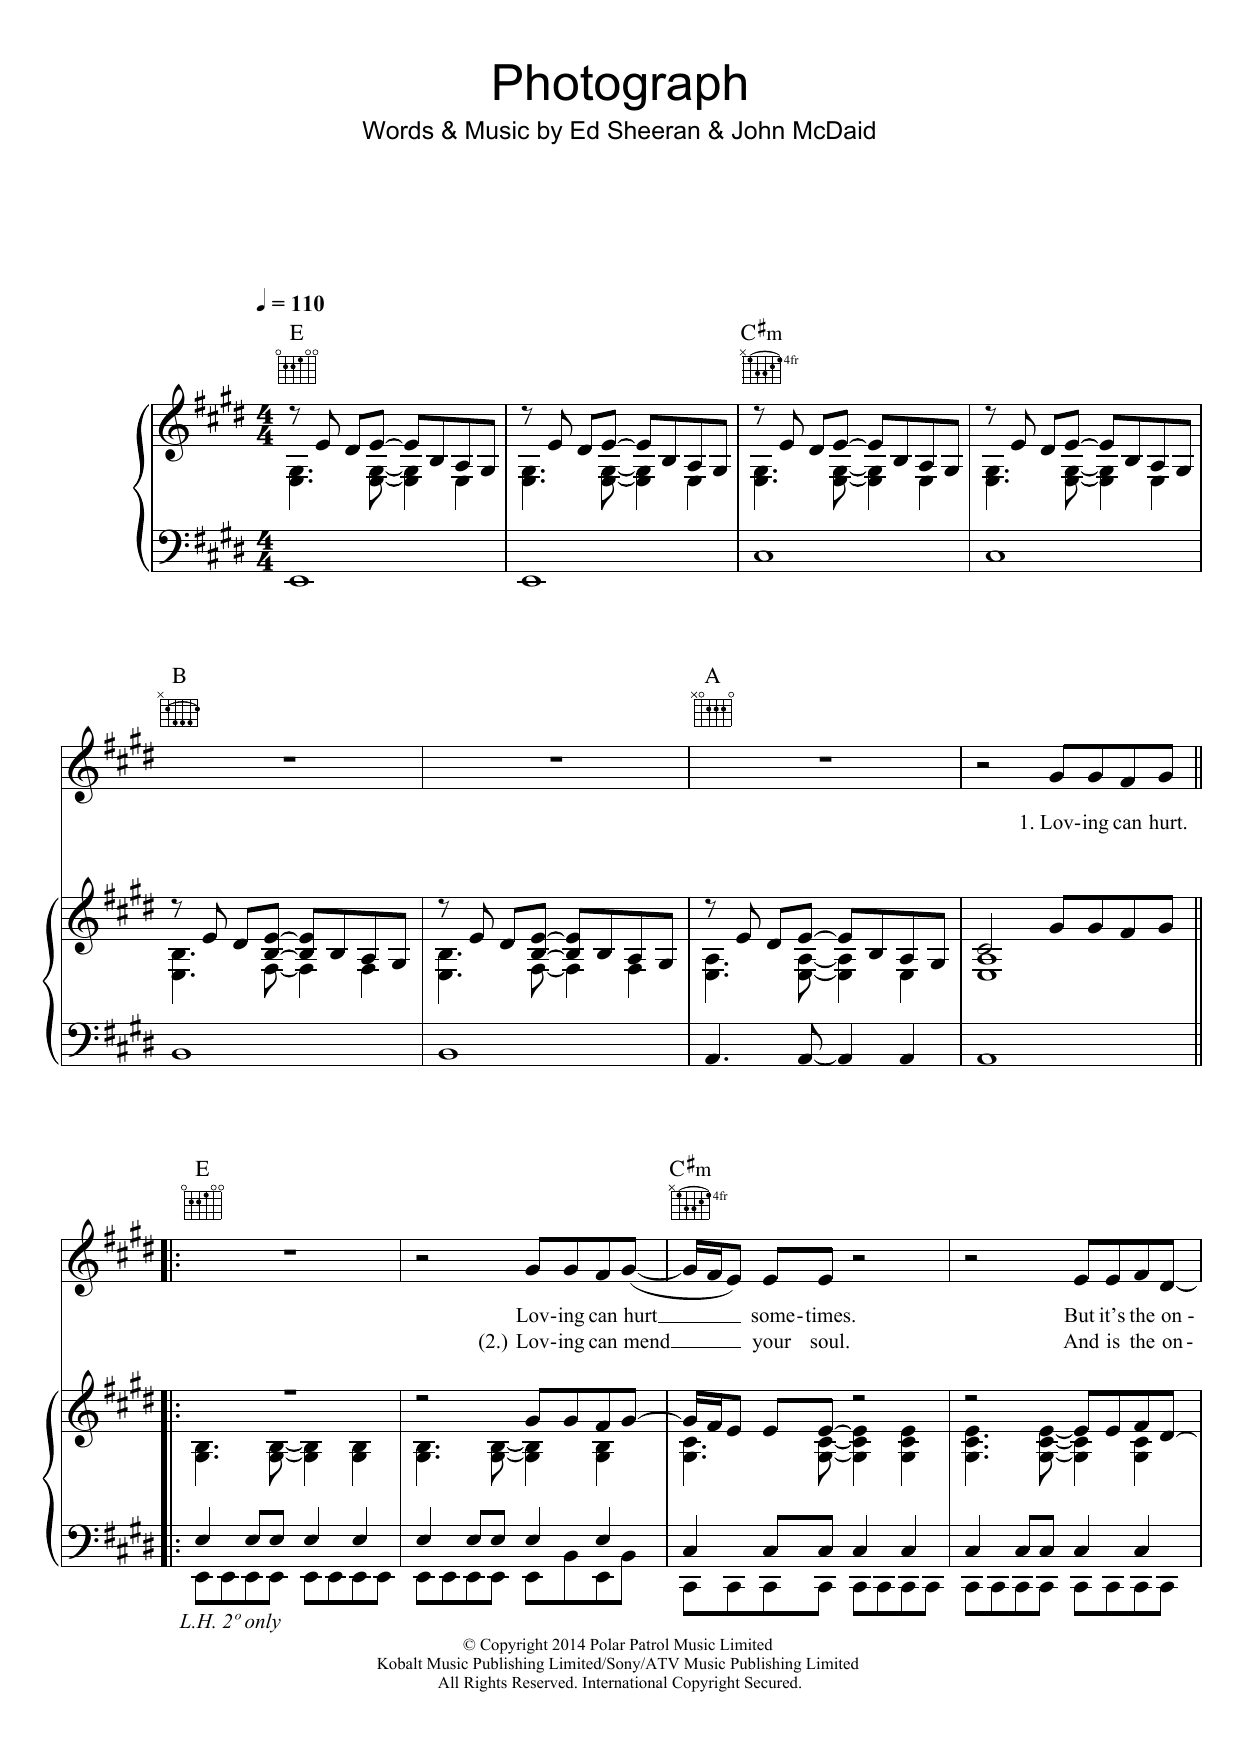 Ed Sheeran Photograph Sheet Music Notes & Chords for Easy Piano - Download or Print PDF